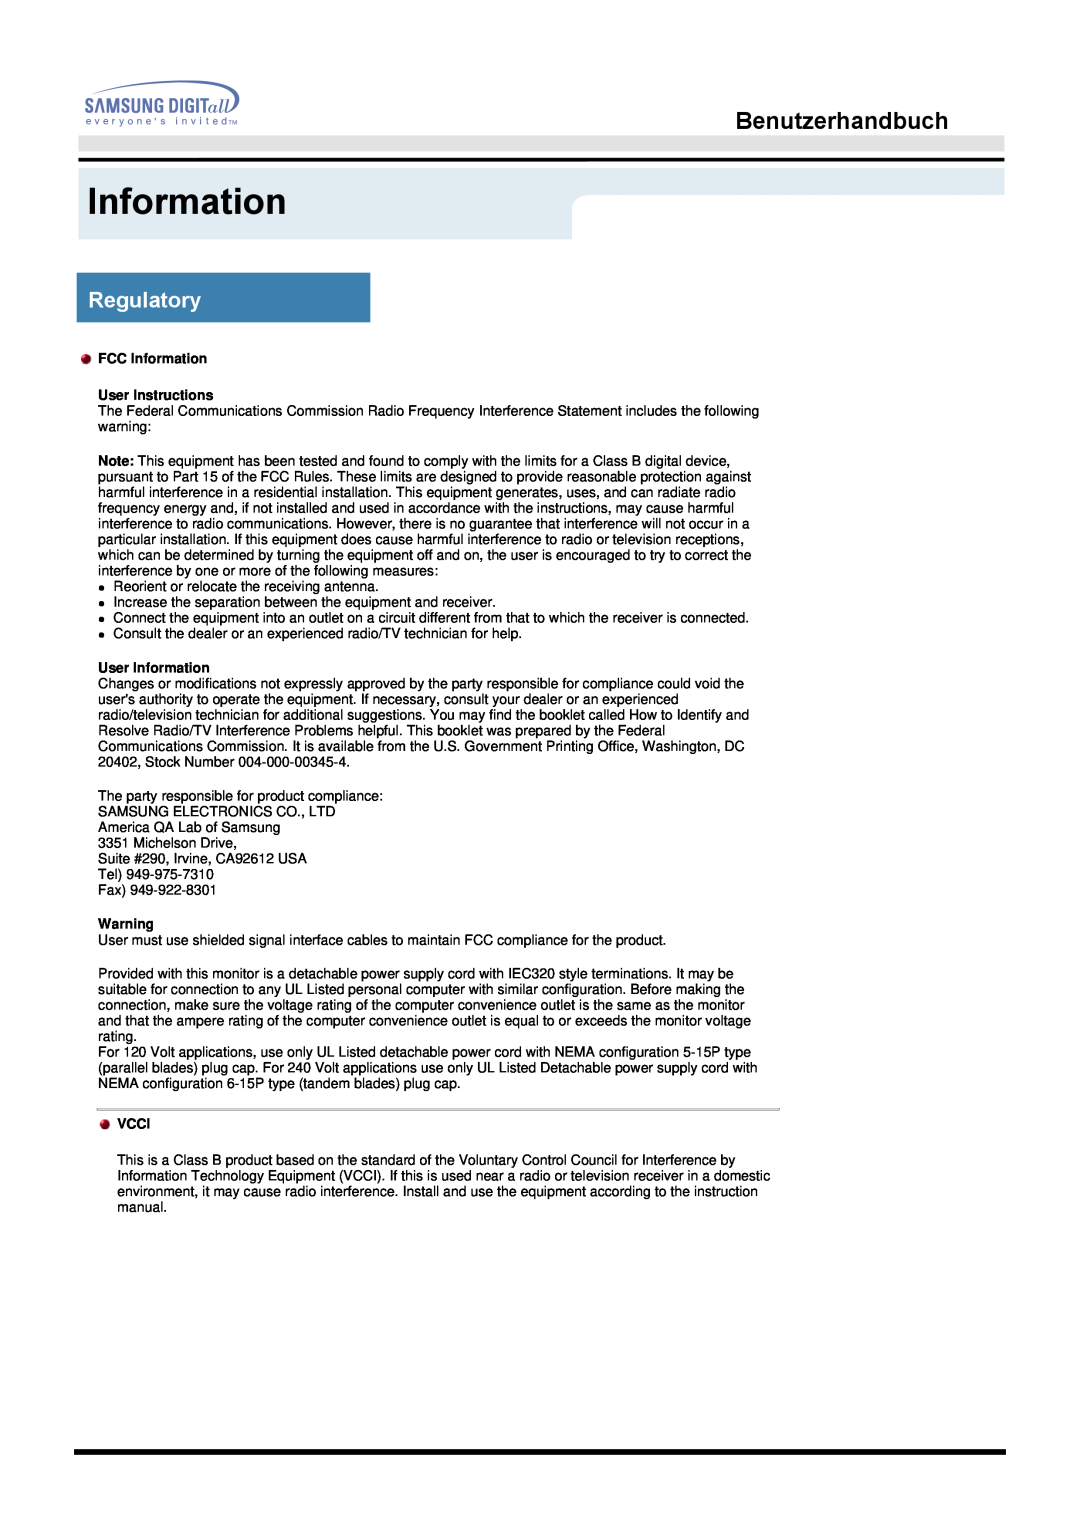 Samsung MO17ESZS/EDC manual Regulatory, Benutzerhandbuch, FCC Information User Instructions, User Information, Vcci 